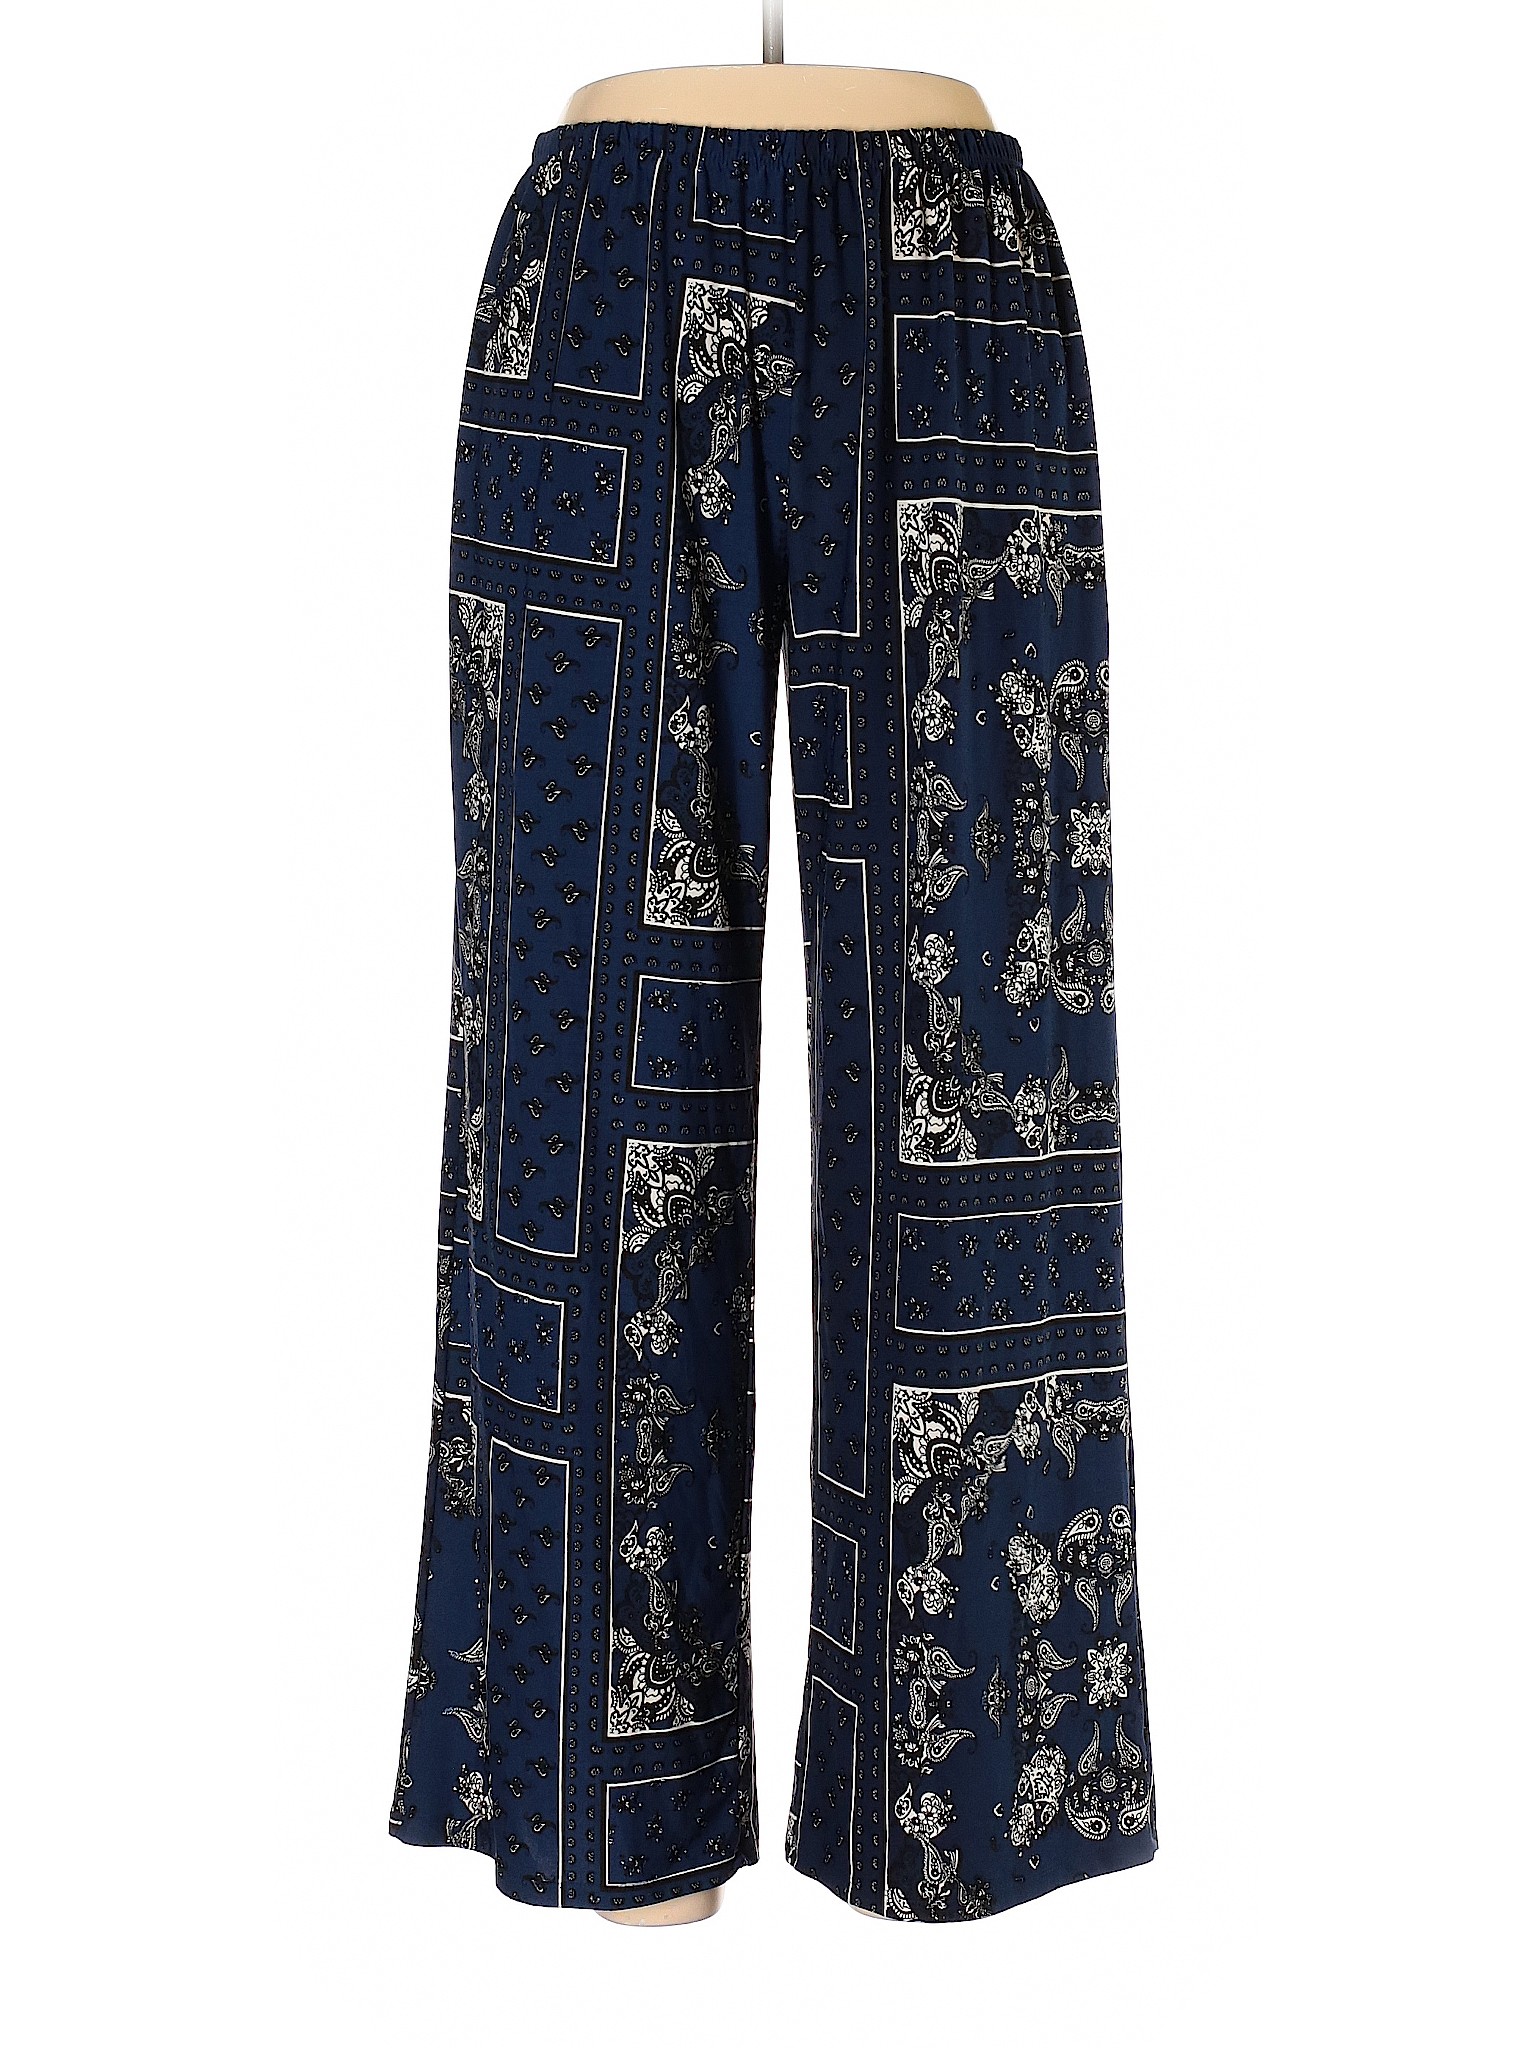 Melissa Paige Women Blue Casual Pants XL | eBay